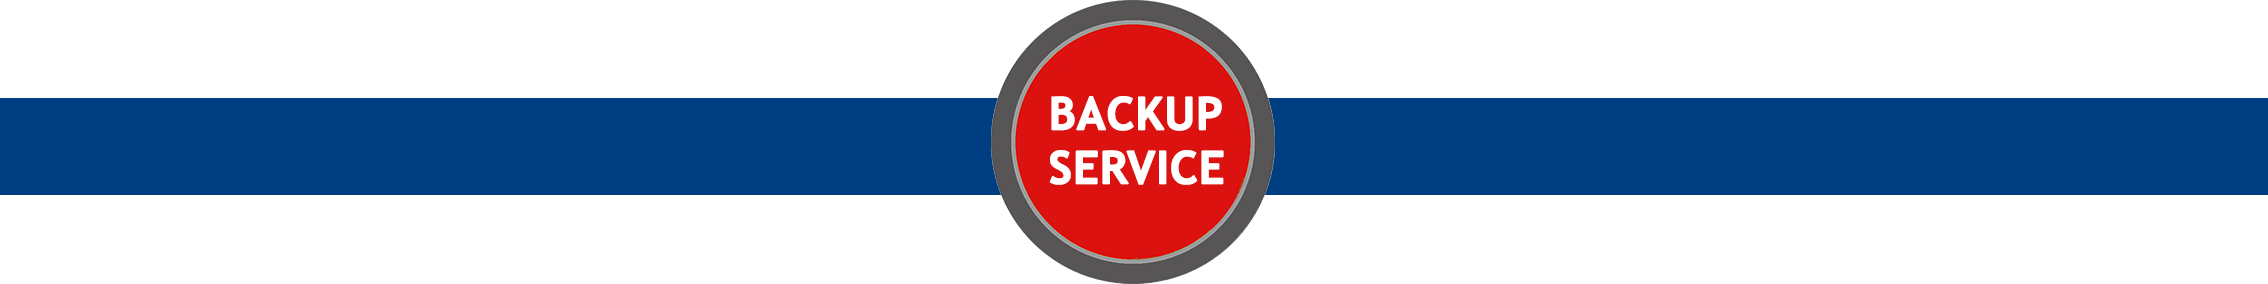 backup service button